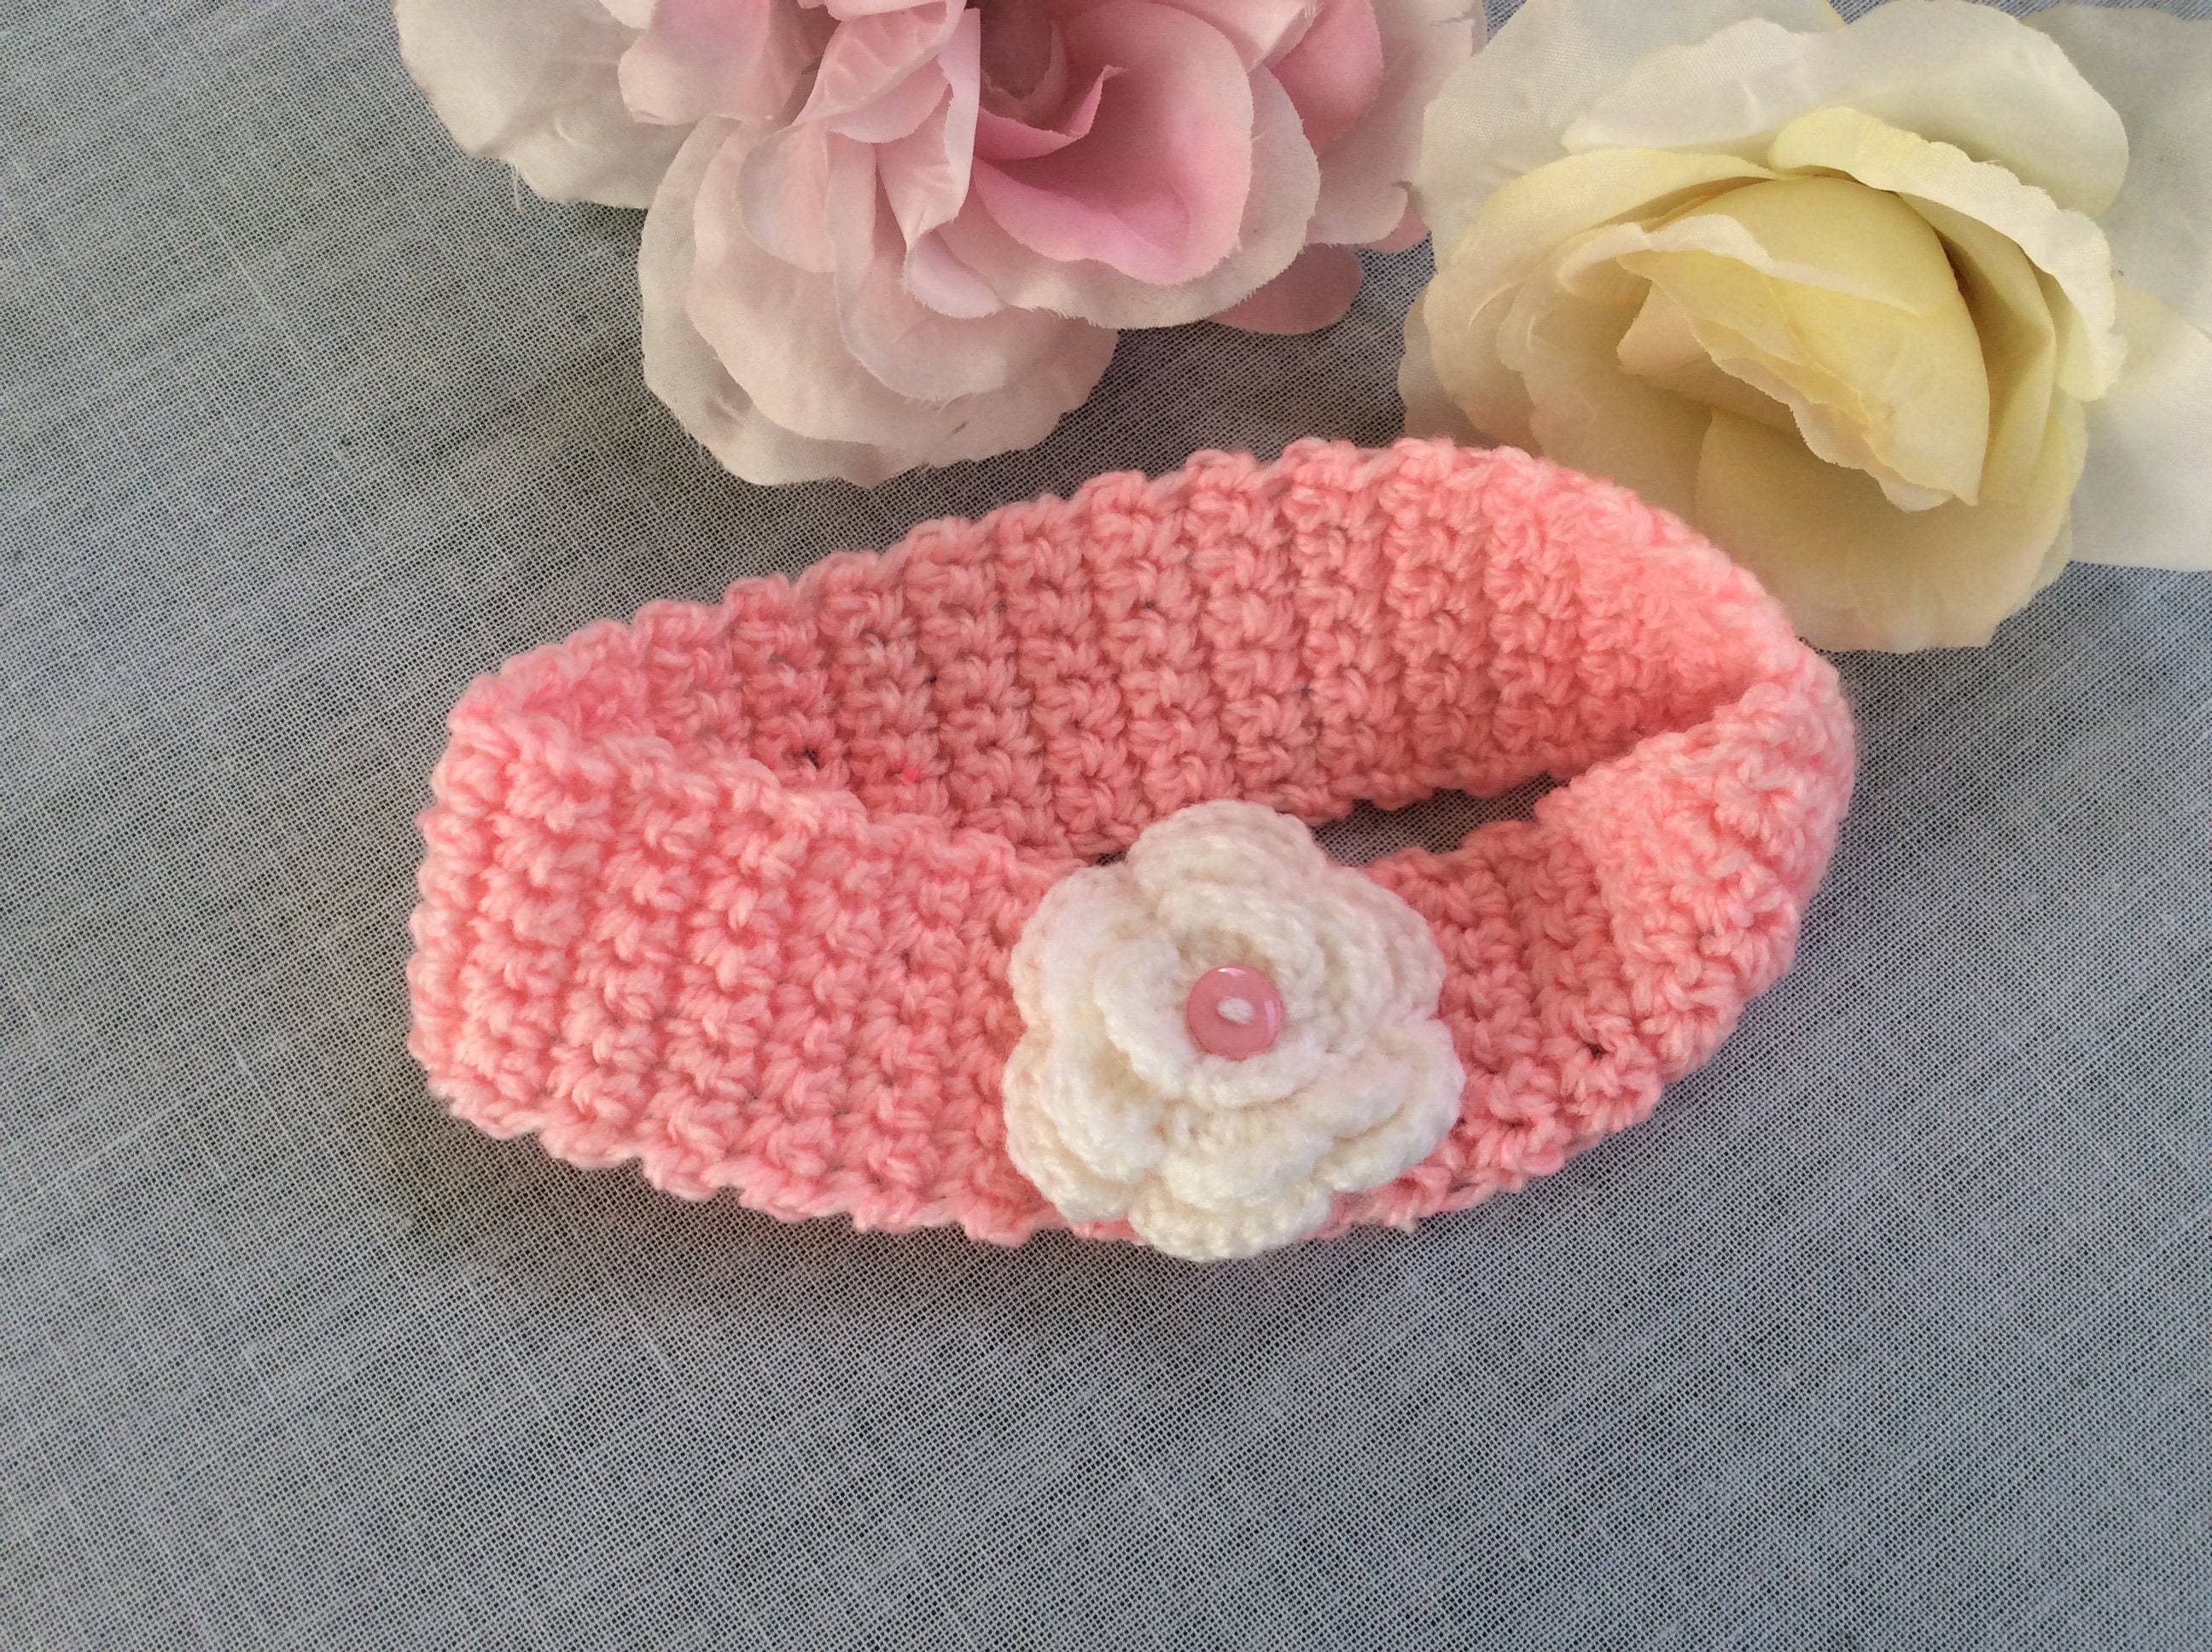 CosyBabyau Pink Crochet Flower Headband for Baby 6 to 12 Months, Crochet Headband, Pink Baby Headband, Baby Gift, Baby Shower Gift